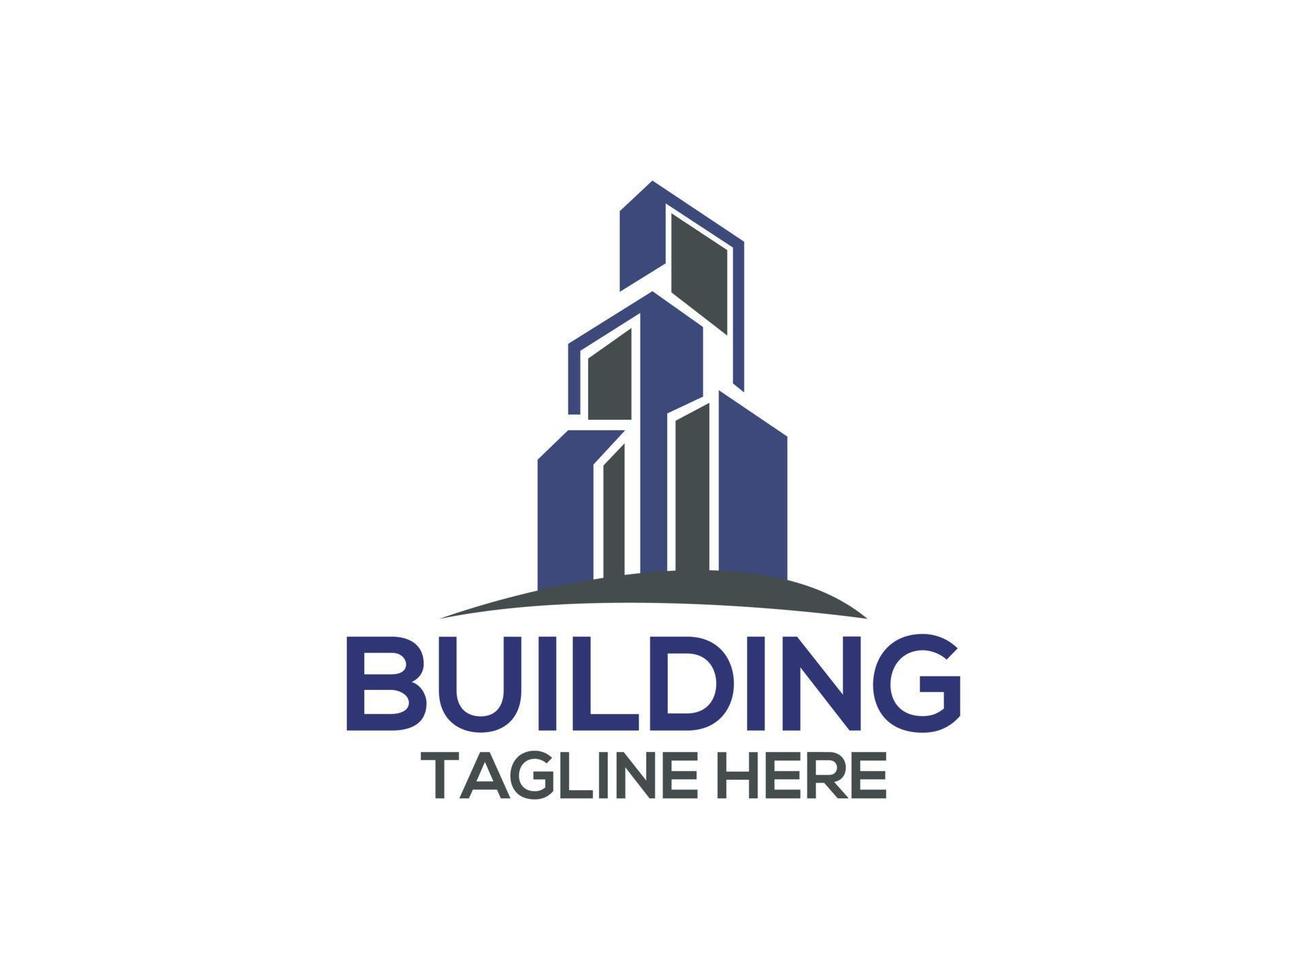 real estate, building and construction logo design vector